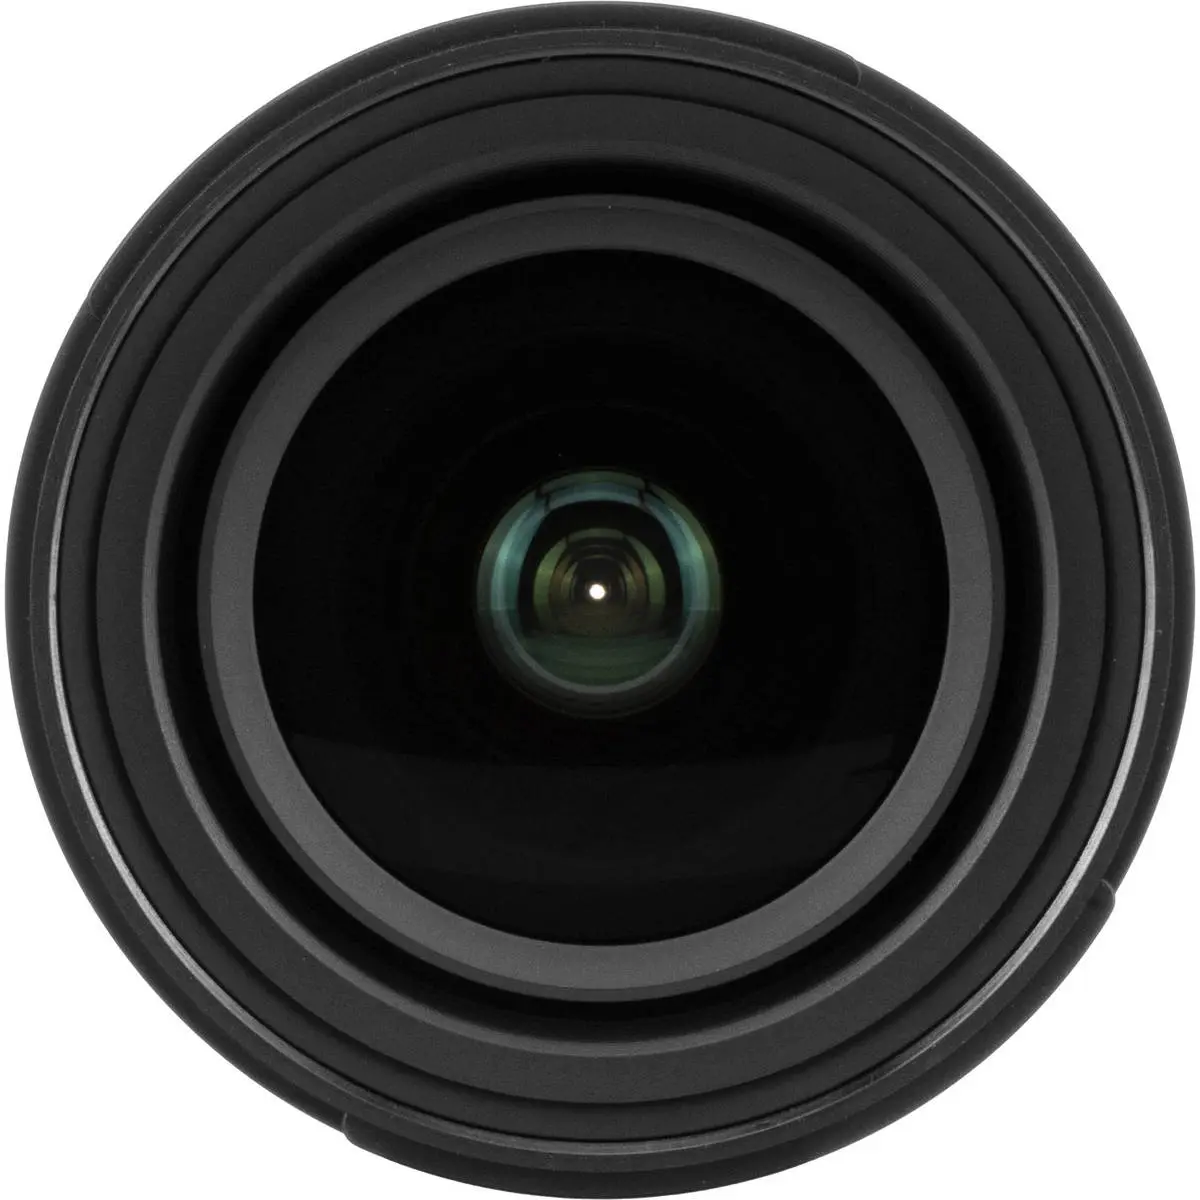 2. Tamron 17-28mm f/2.8 Di III RXD (A046) Sony E Lens